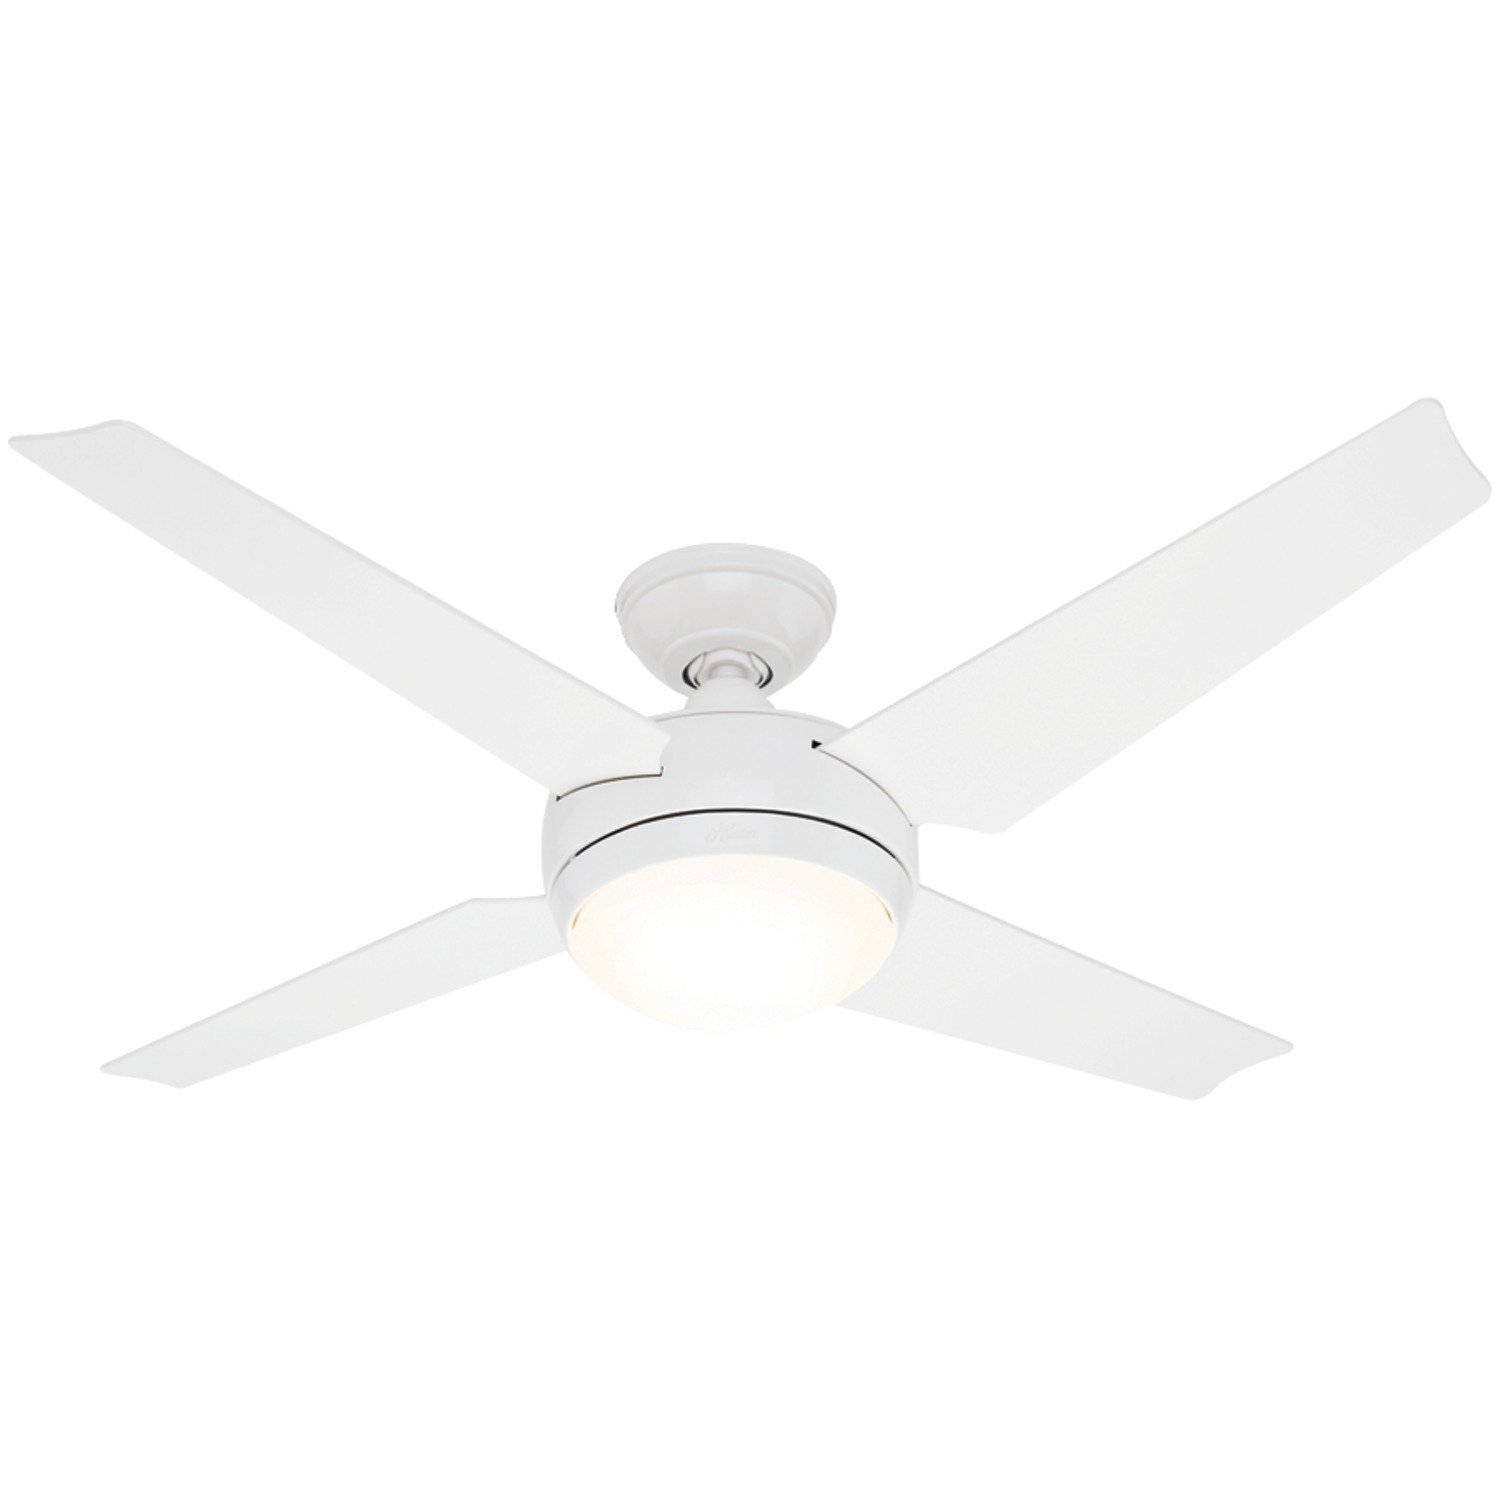 White Ceiling Fan Light Remote1500 X 1500